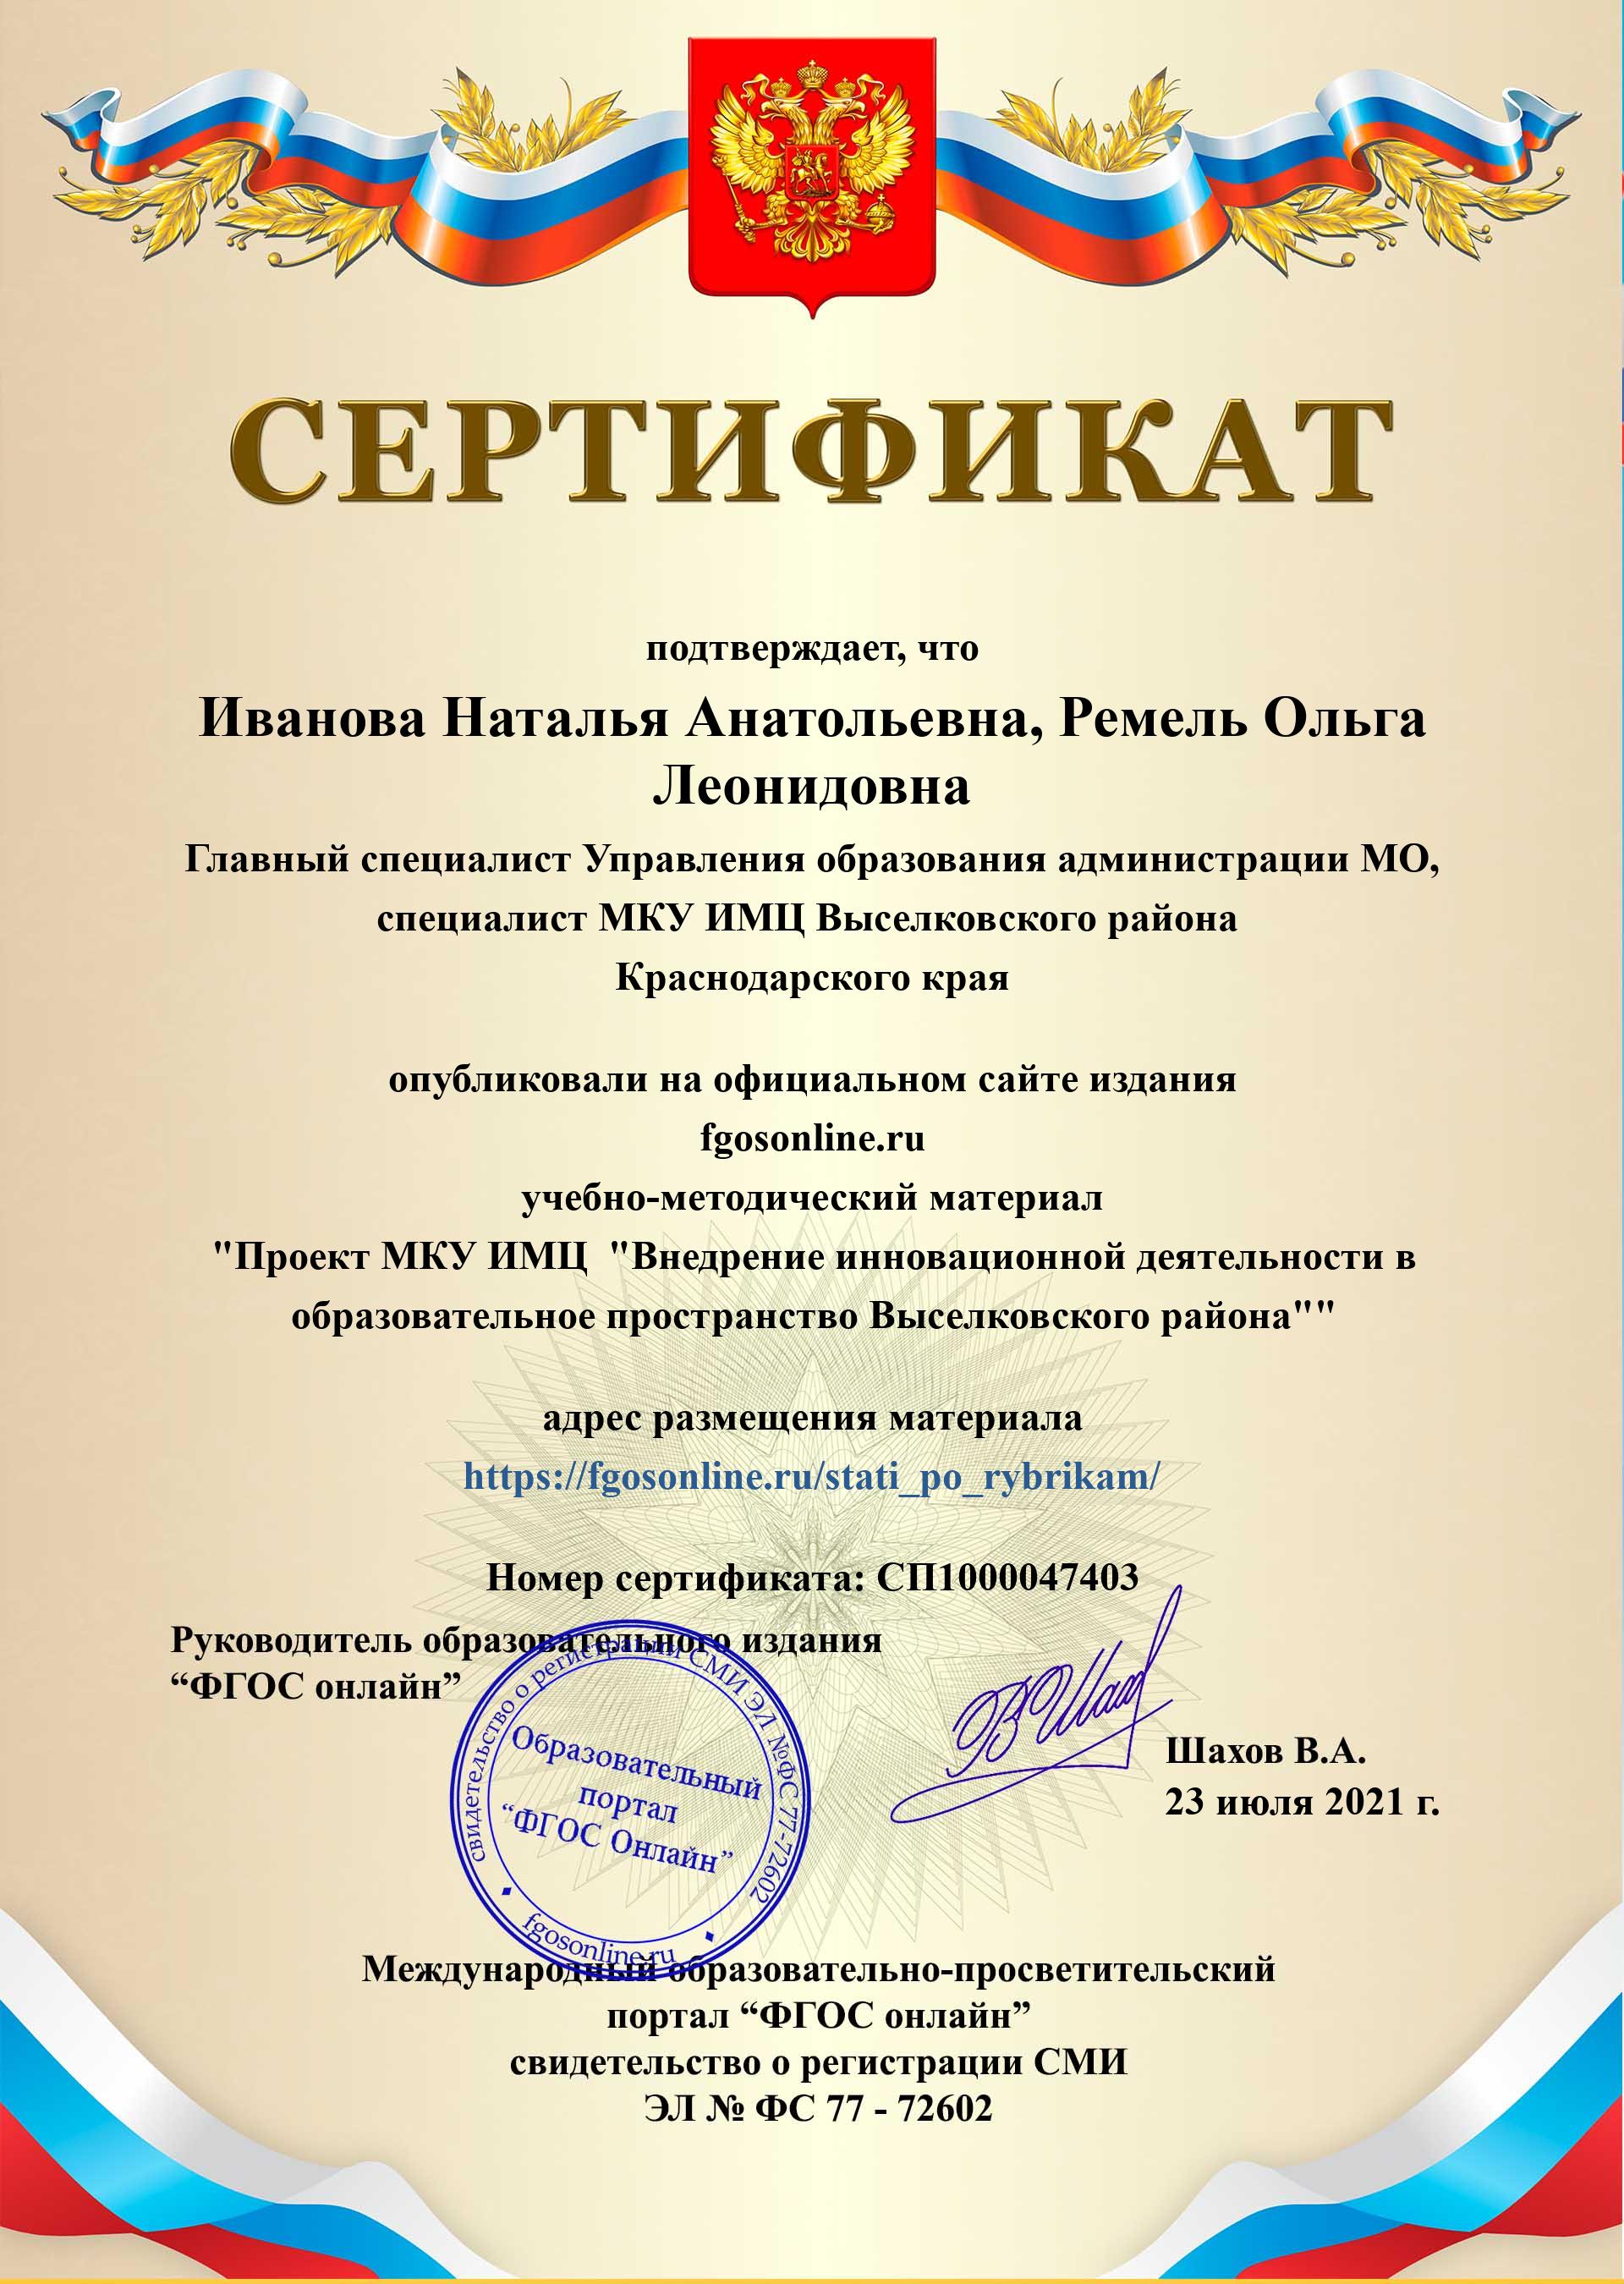 сертификатпубликации сертпублликации1809